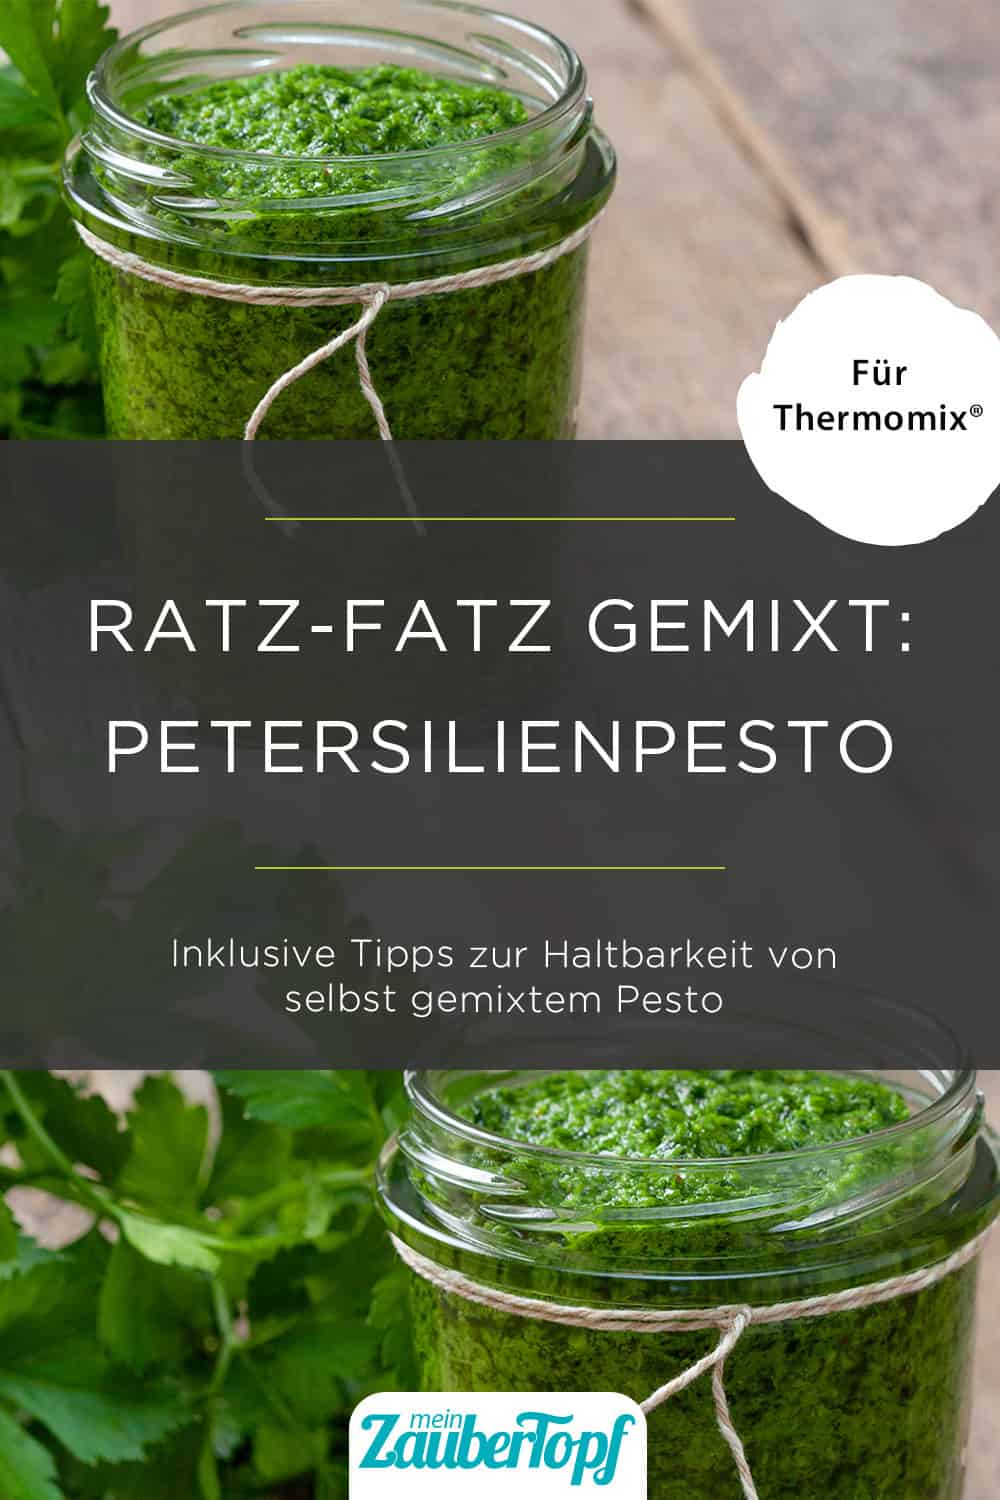 Petersilien-Pesto mit dem Thermomix® – Foto: gettyimages / natashamam